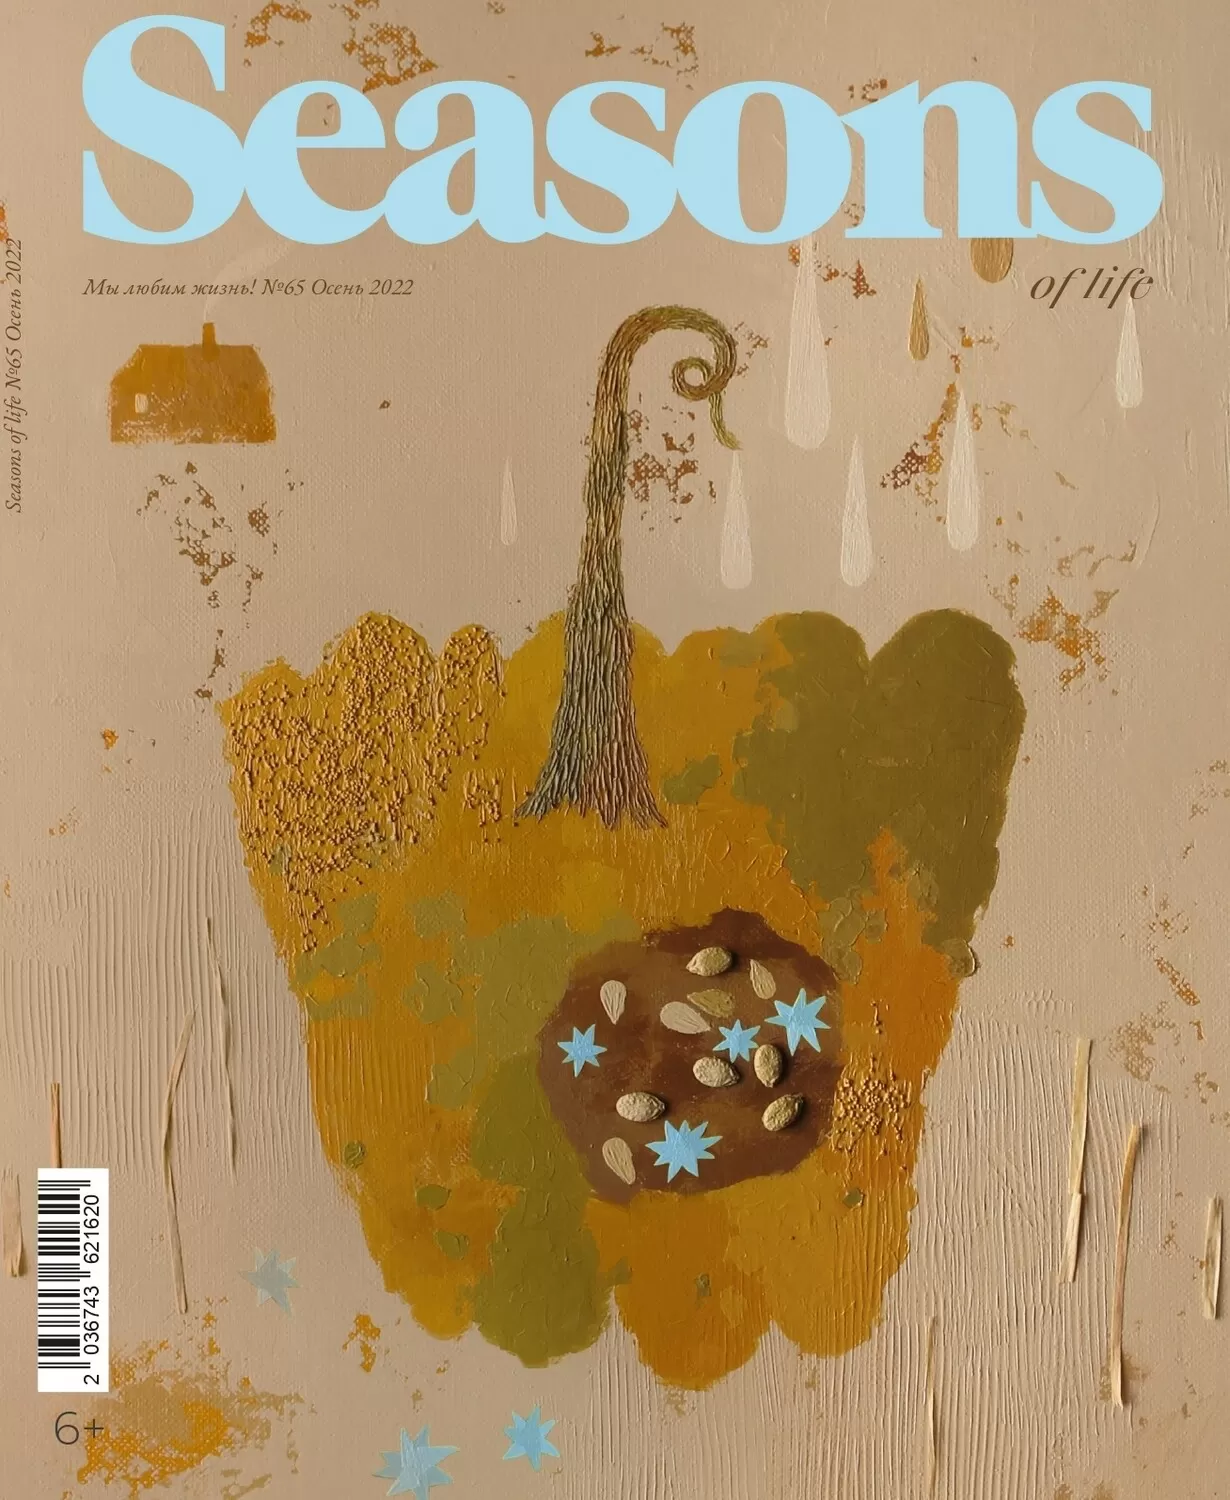 Журнал Seasons of life № 65 (осень 2022)